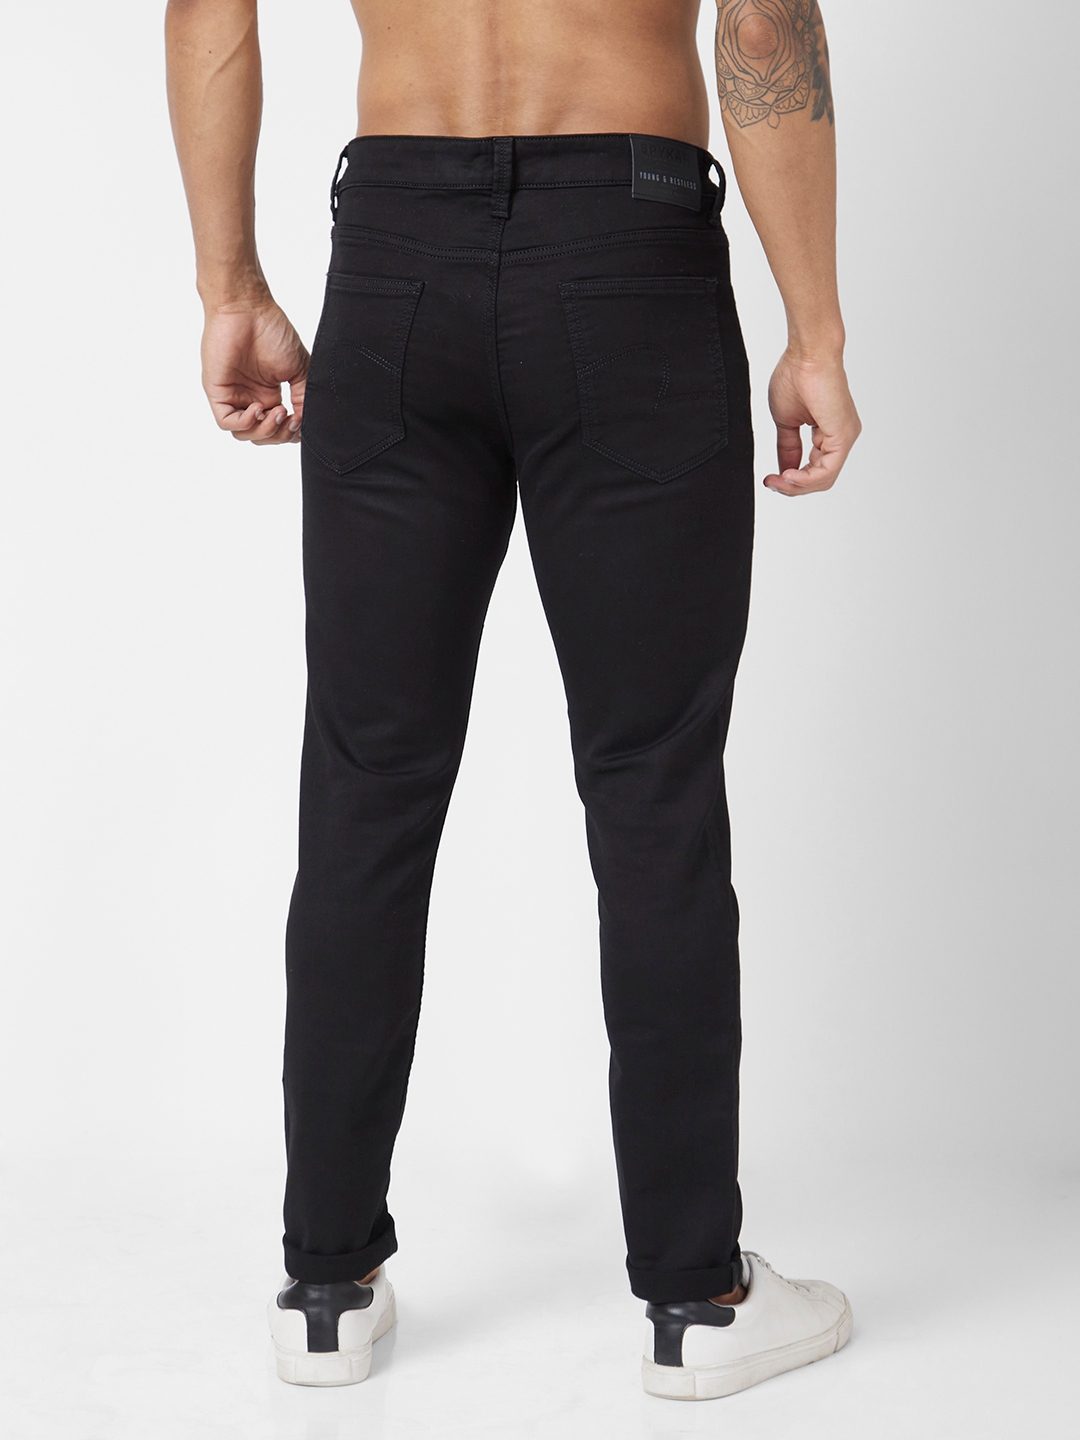 spykar | Spykar Men Black Cotton Stretch Super Slim Fit Tapered Length Clean Look Low Rise Jeans (Super Skinny) 4